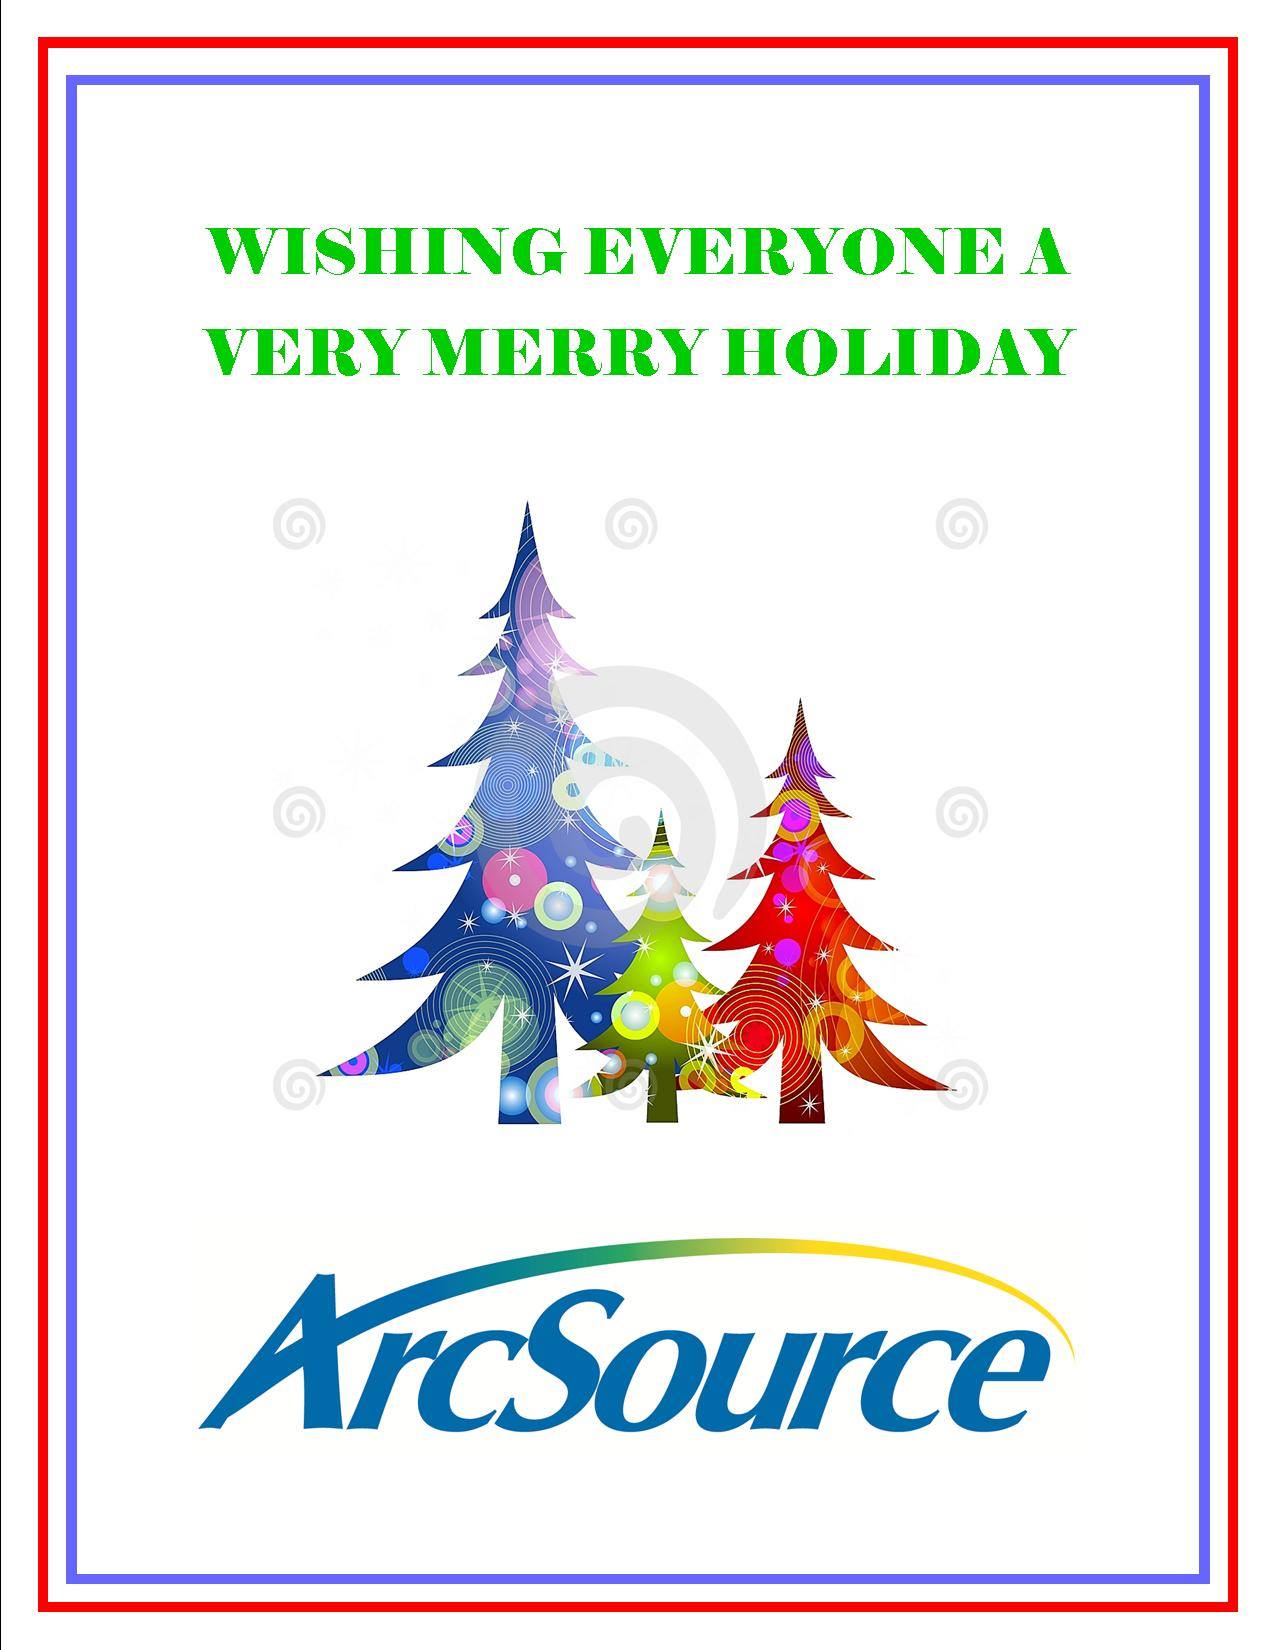 ArcSource